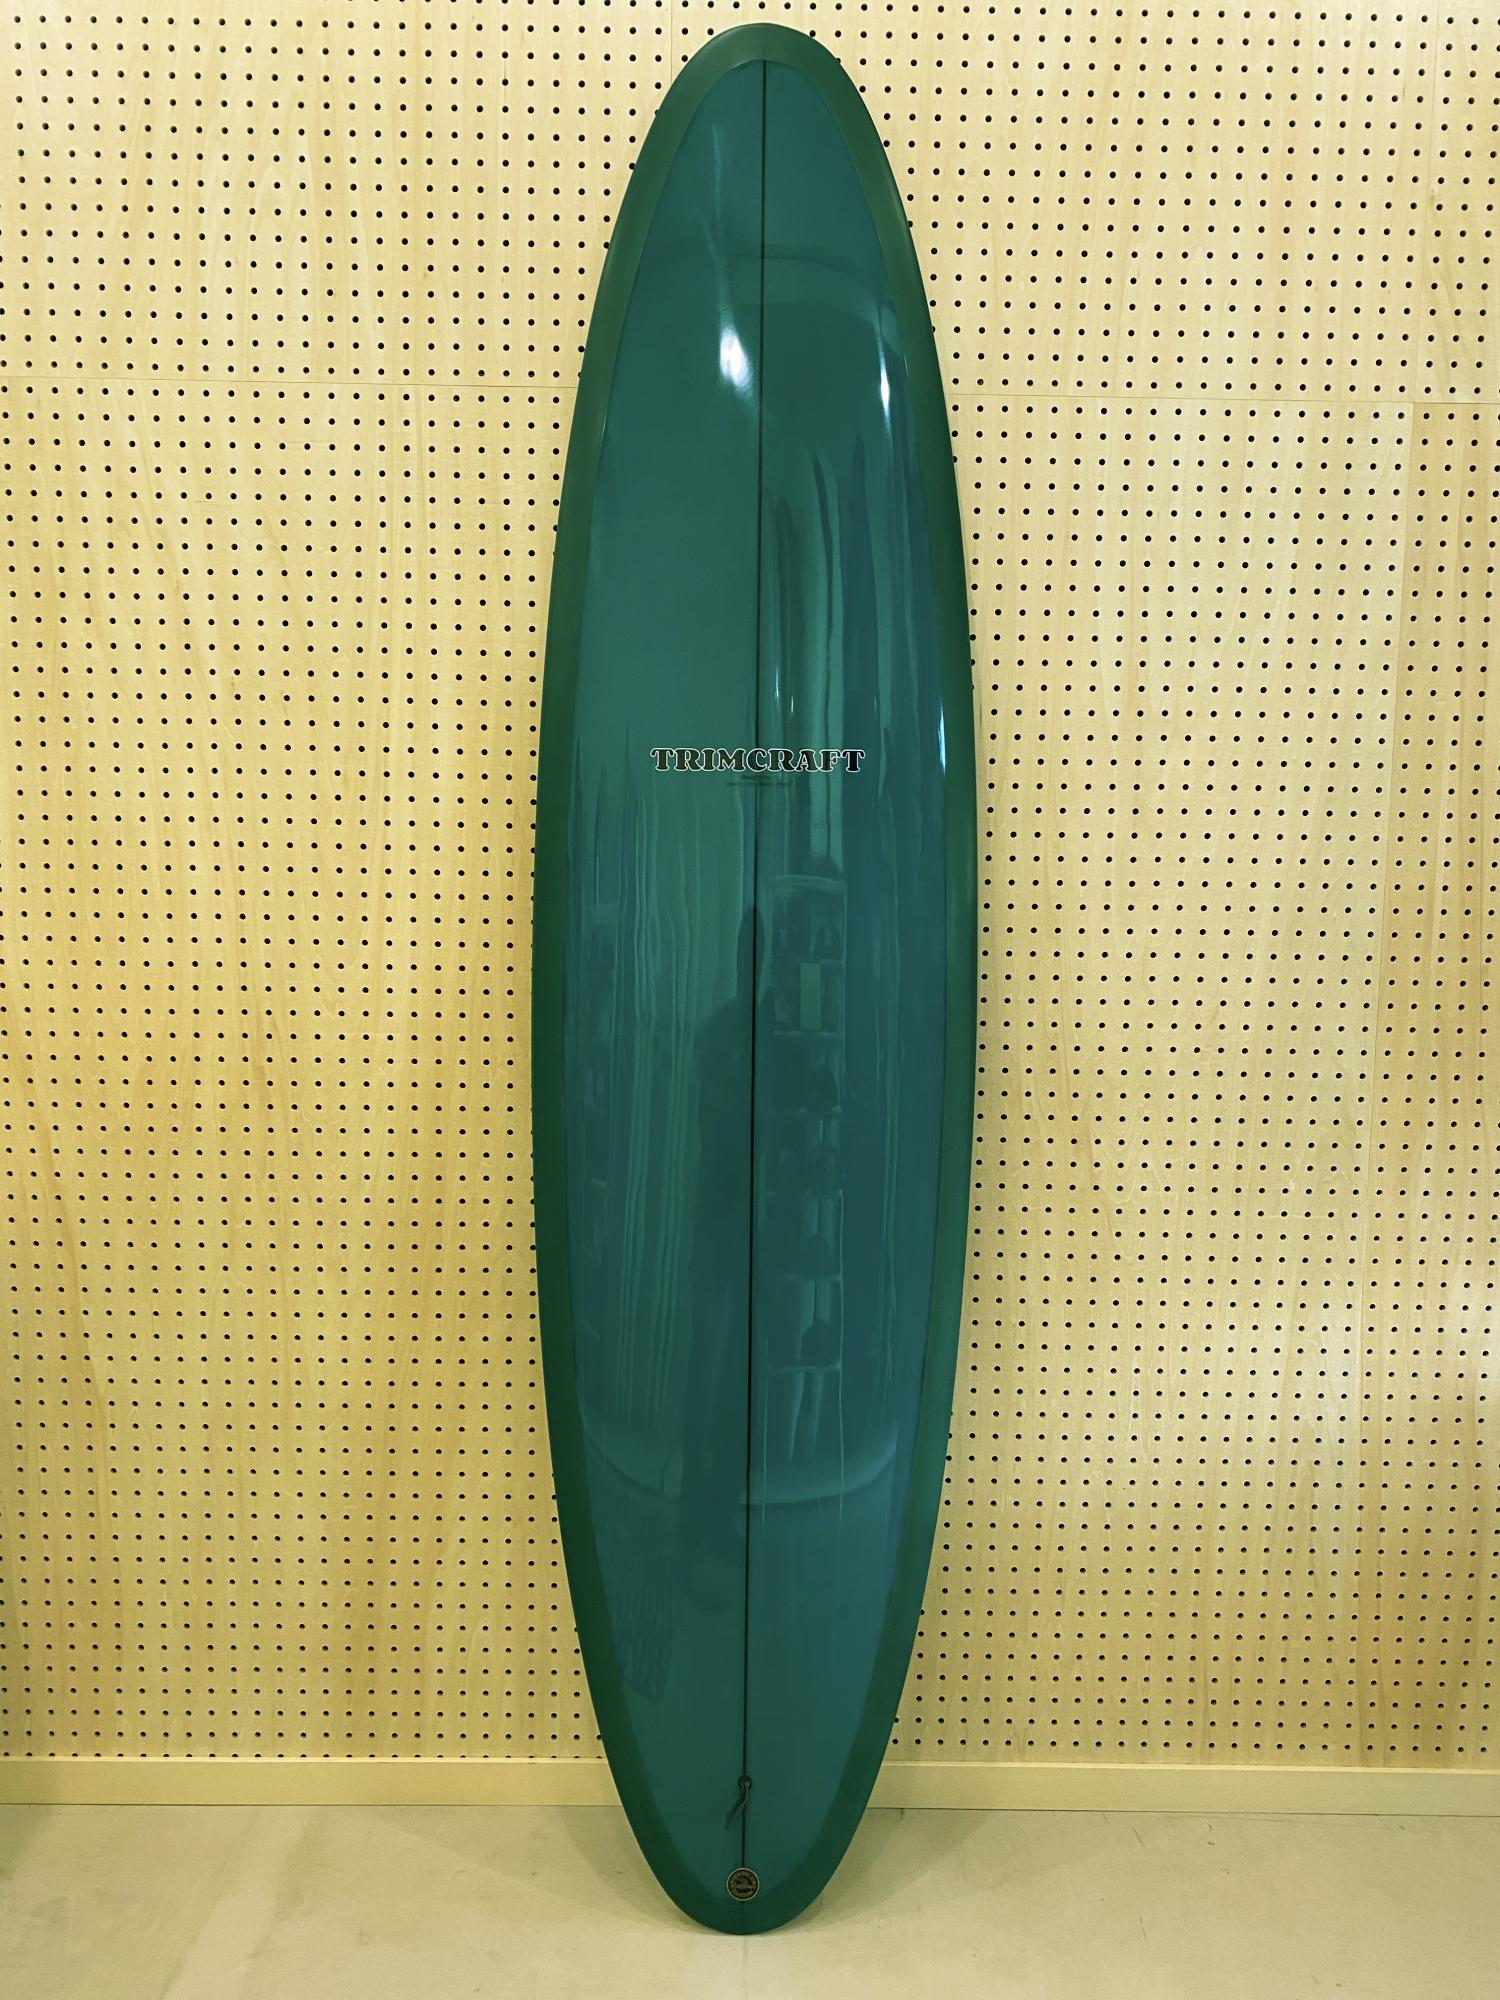 re. Bowls 7.4 TRIMCRAFT SURFBOARDS